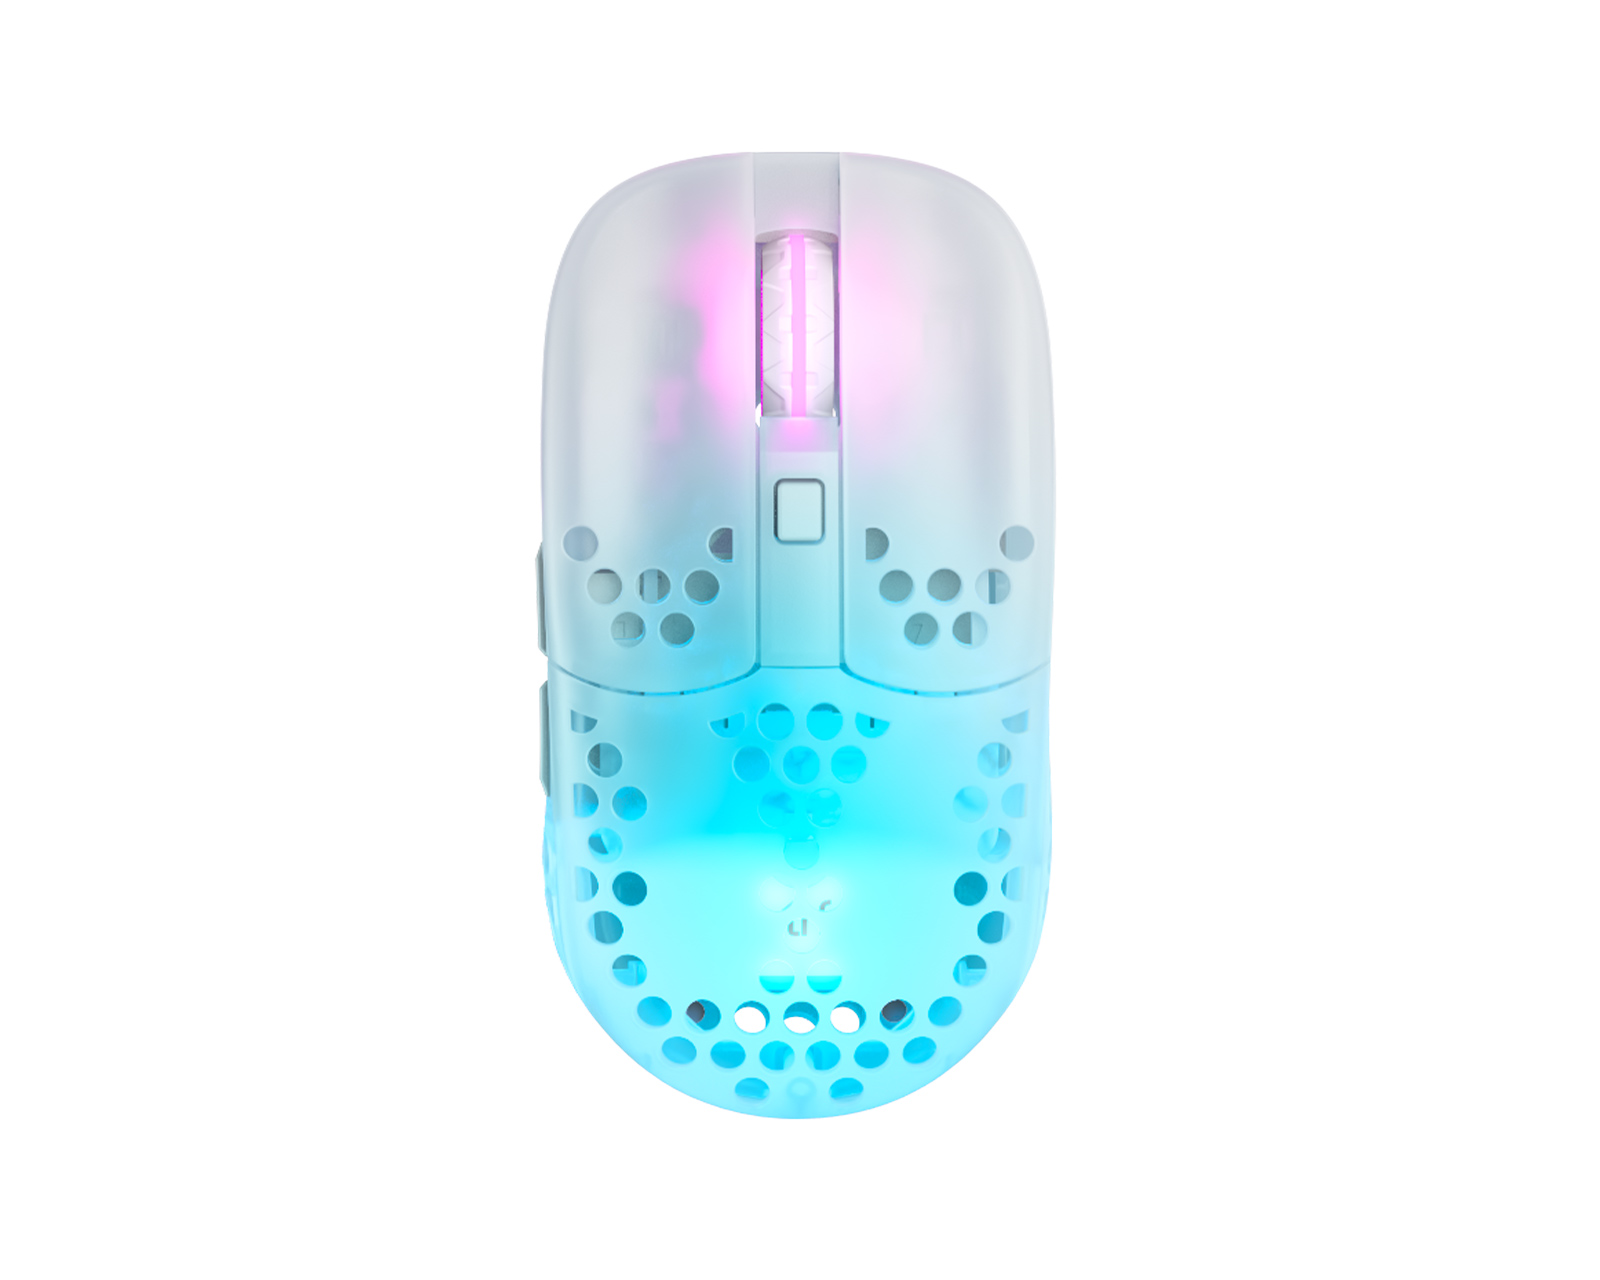 MZ1 RGB Gaming Mouse - White - MaxGaming.com